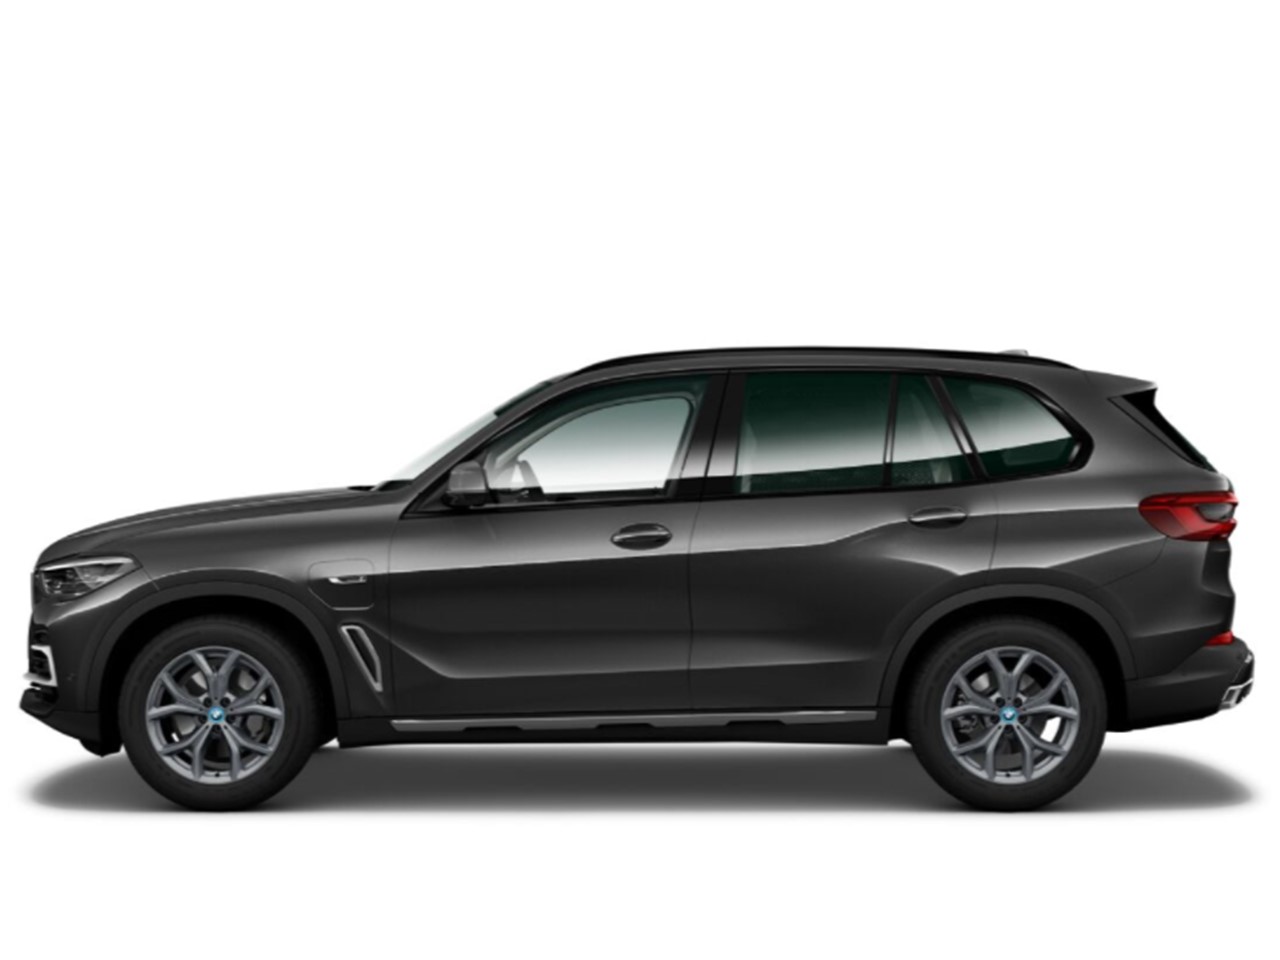 BMW X5 xDrive45e Auto 286CV (Empresas y autónomos) Renting